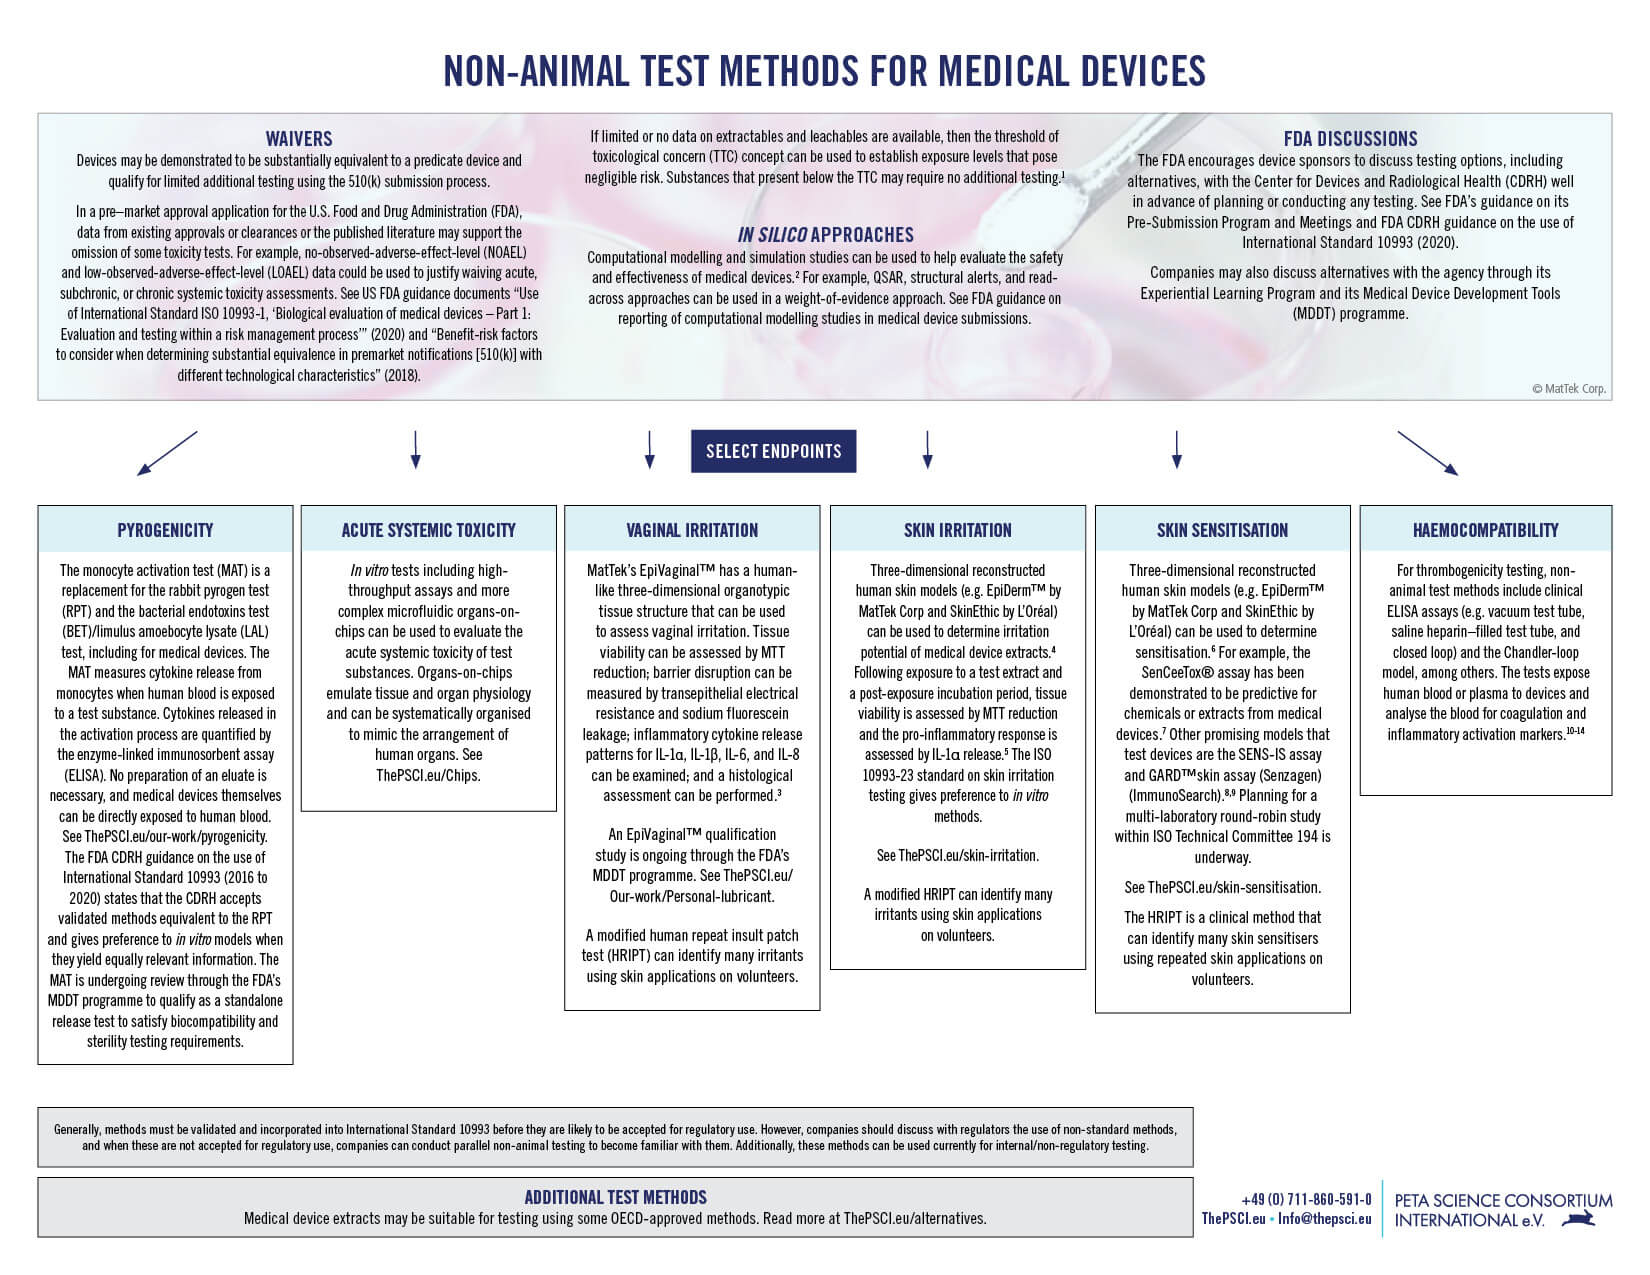 Non-Animal Test Methods for Medical Devices - PETA Science Consortium  International .